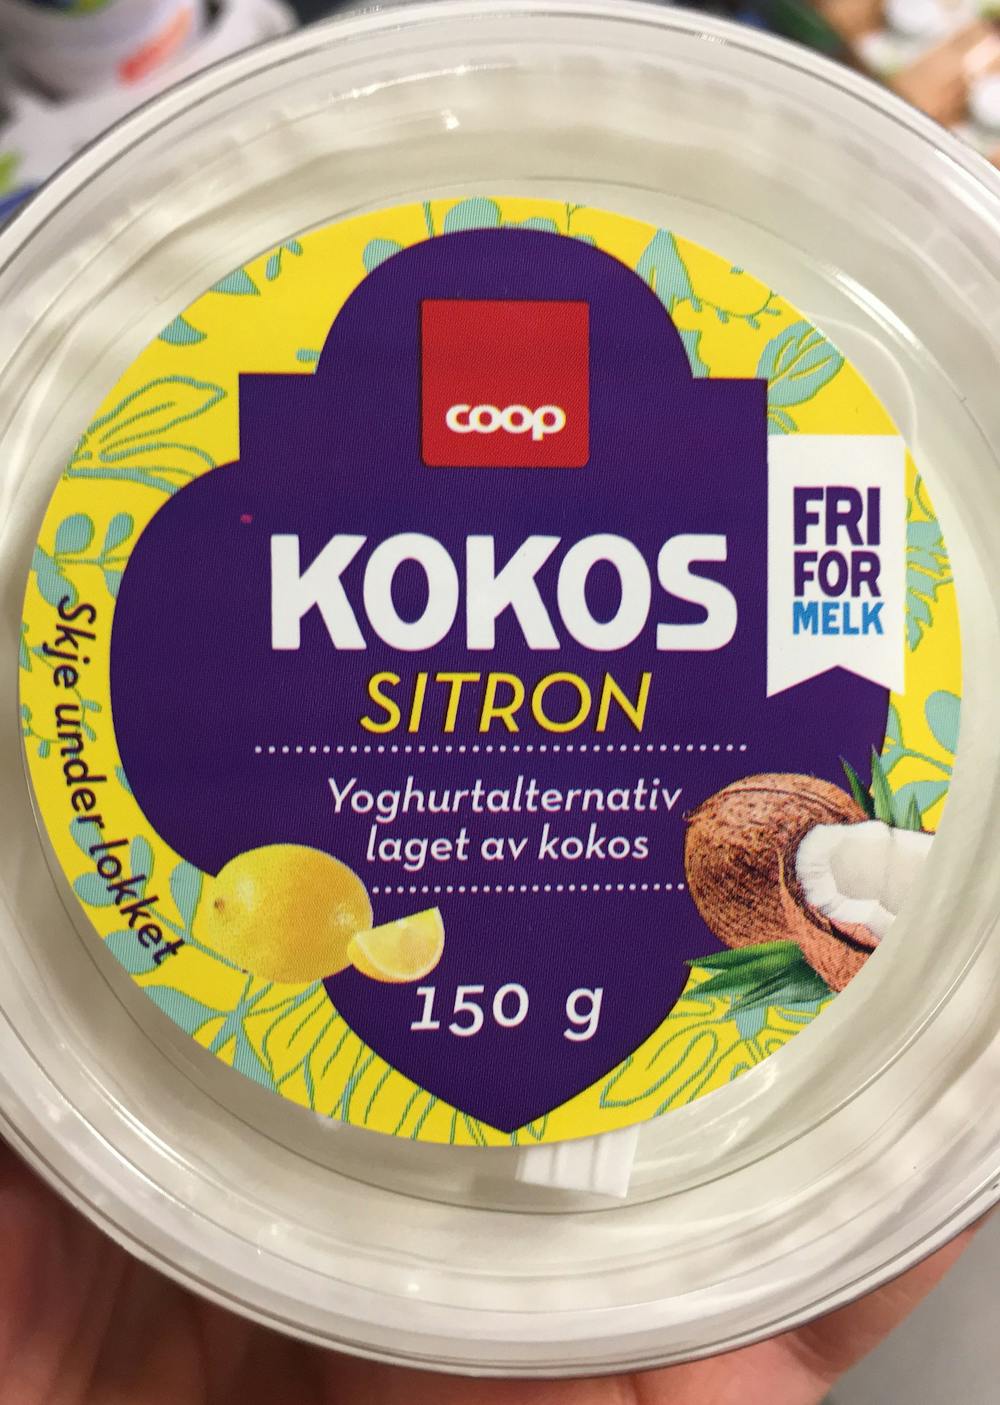 Kokos sitron, Coop